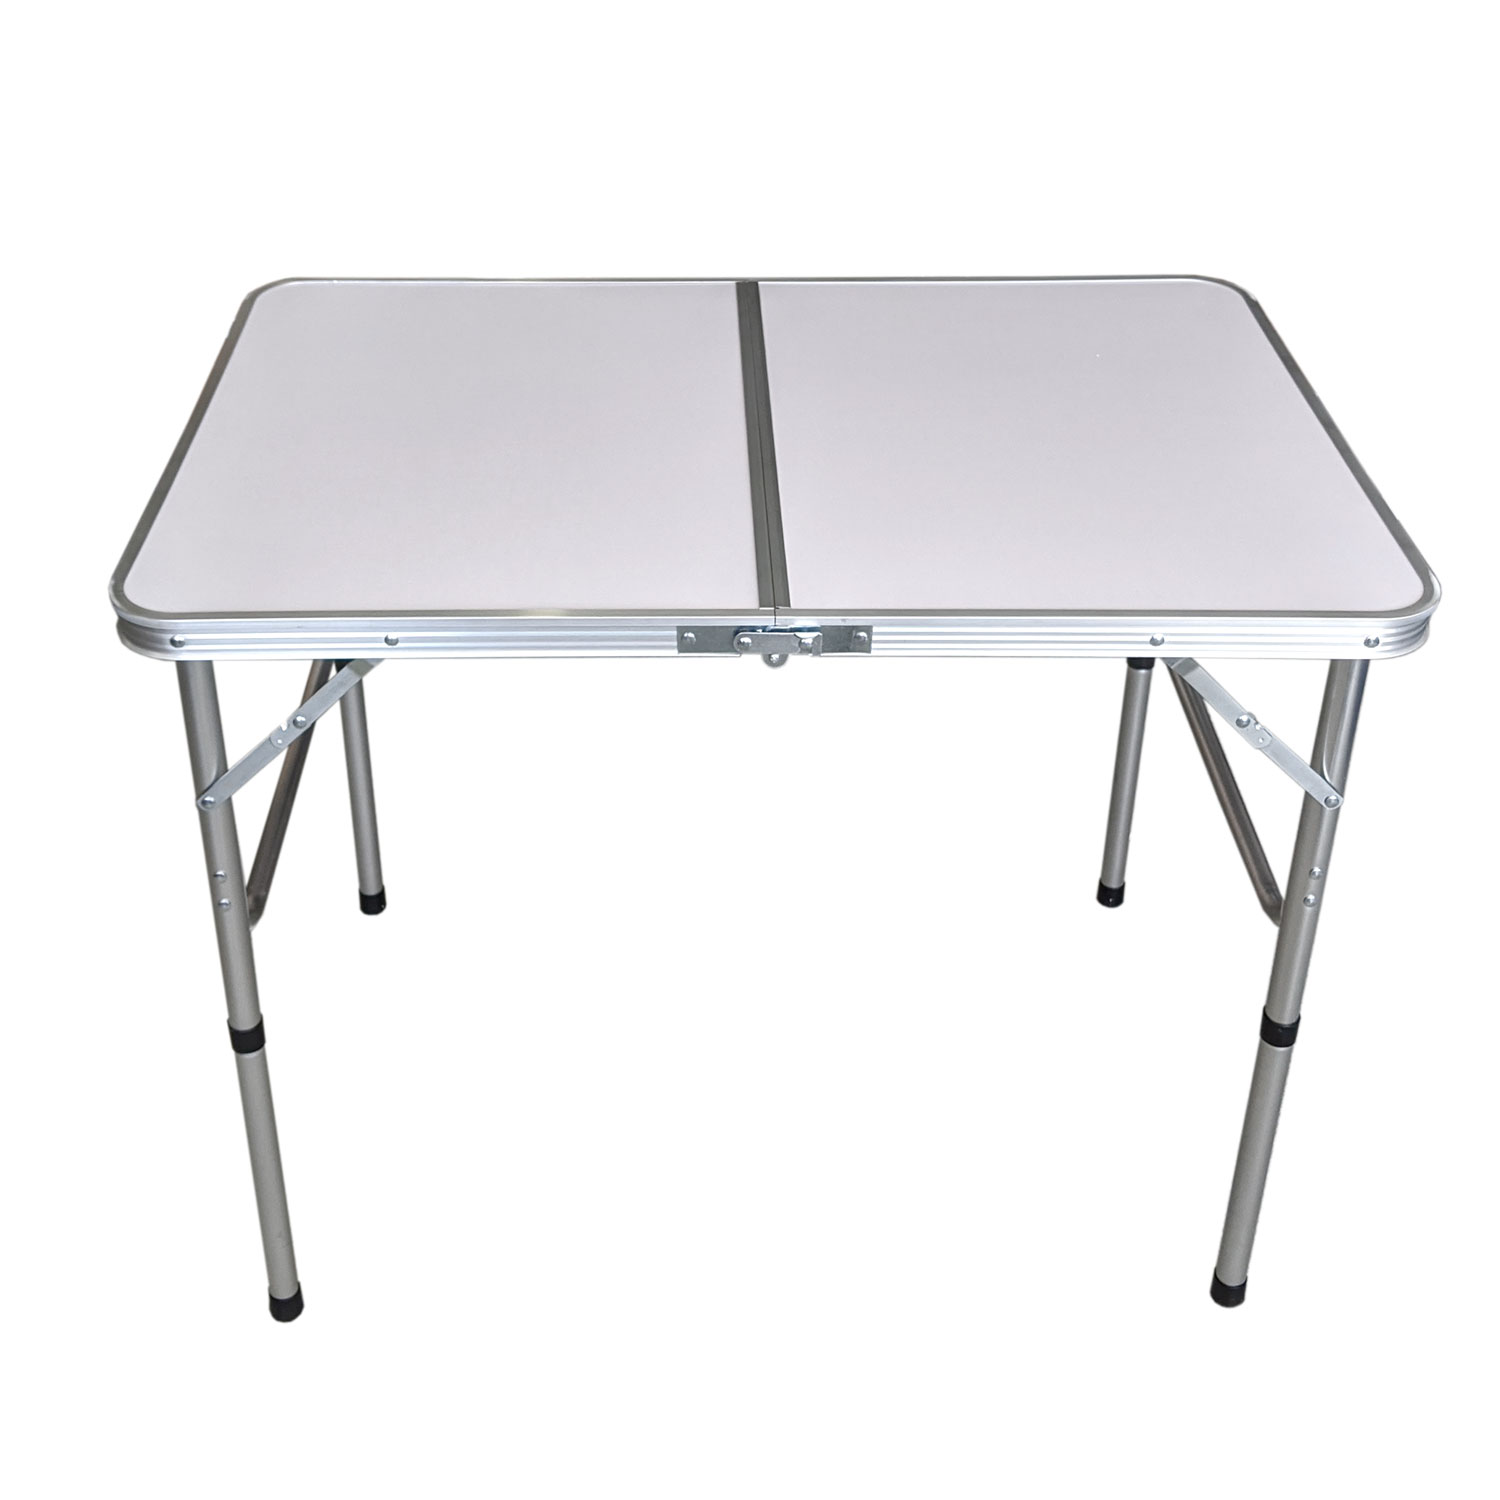 Camping Rolltisch Aluminium klappbar Outdoor Tisch Klapptisch Campingtisch 58x58 